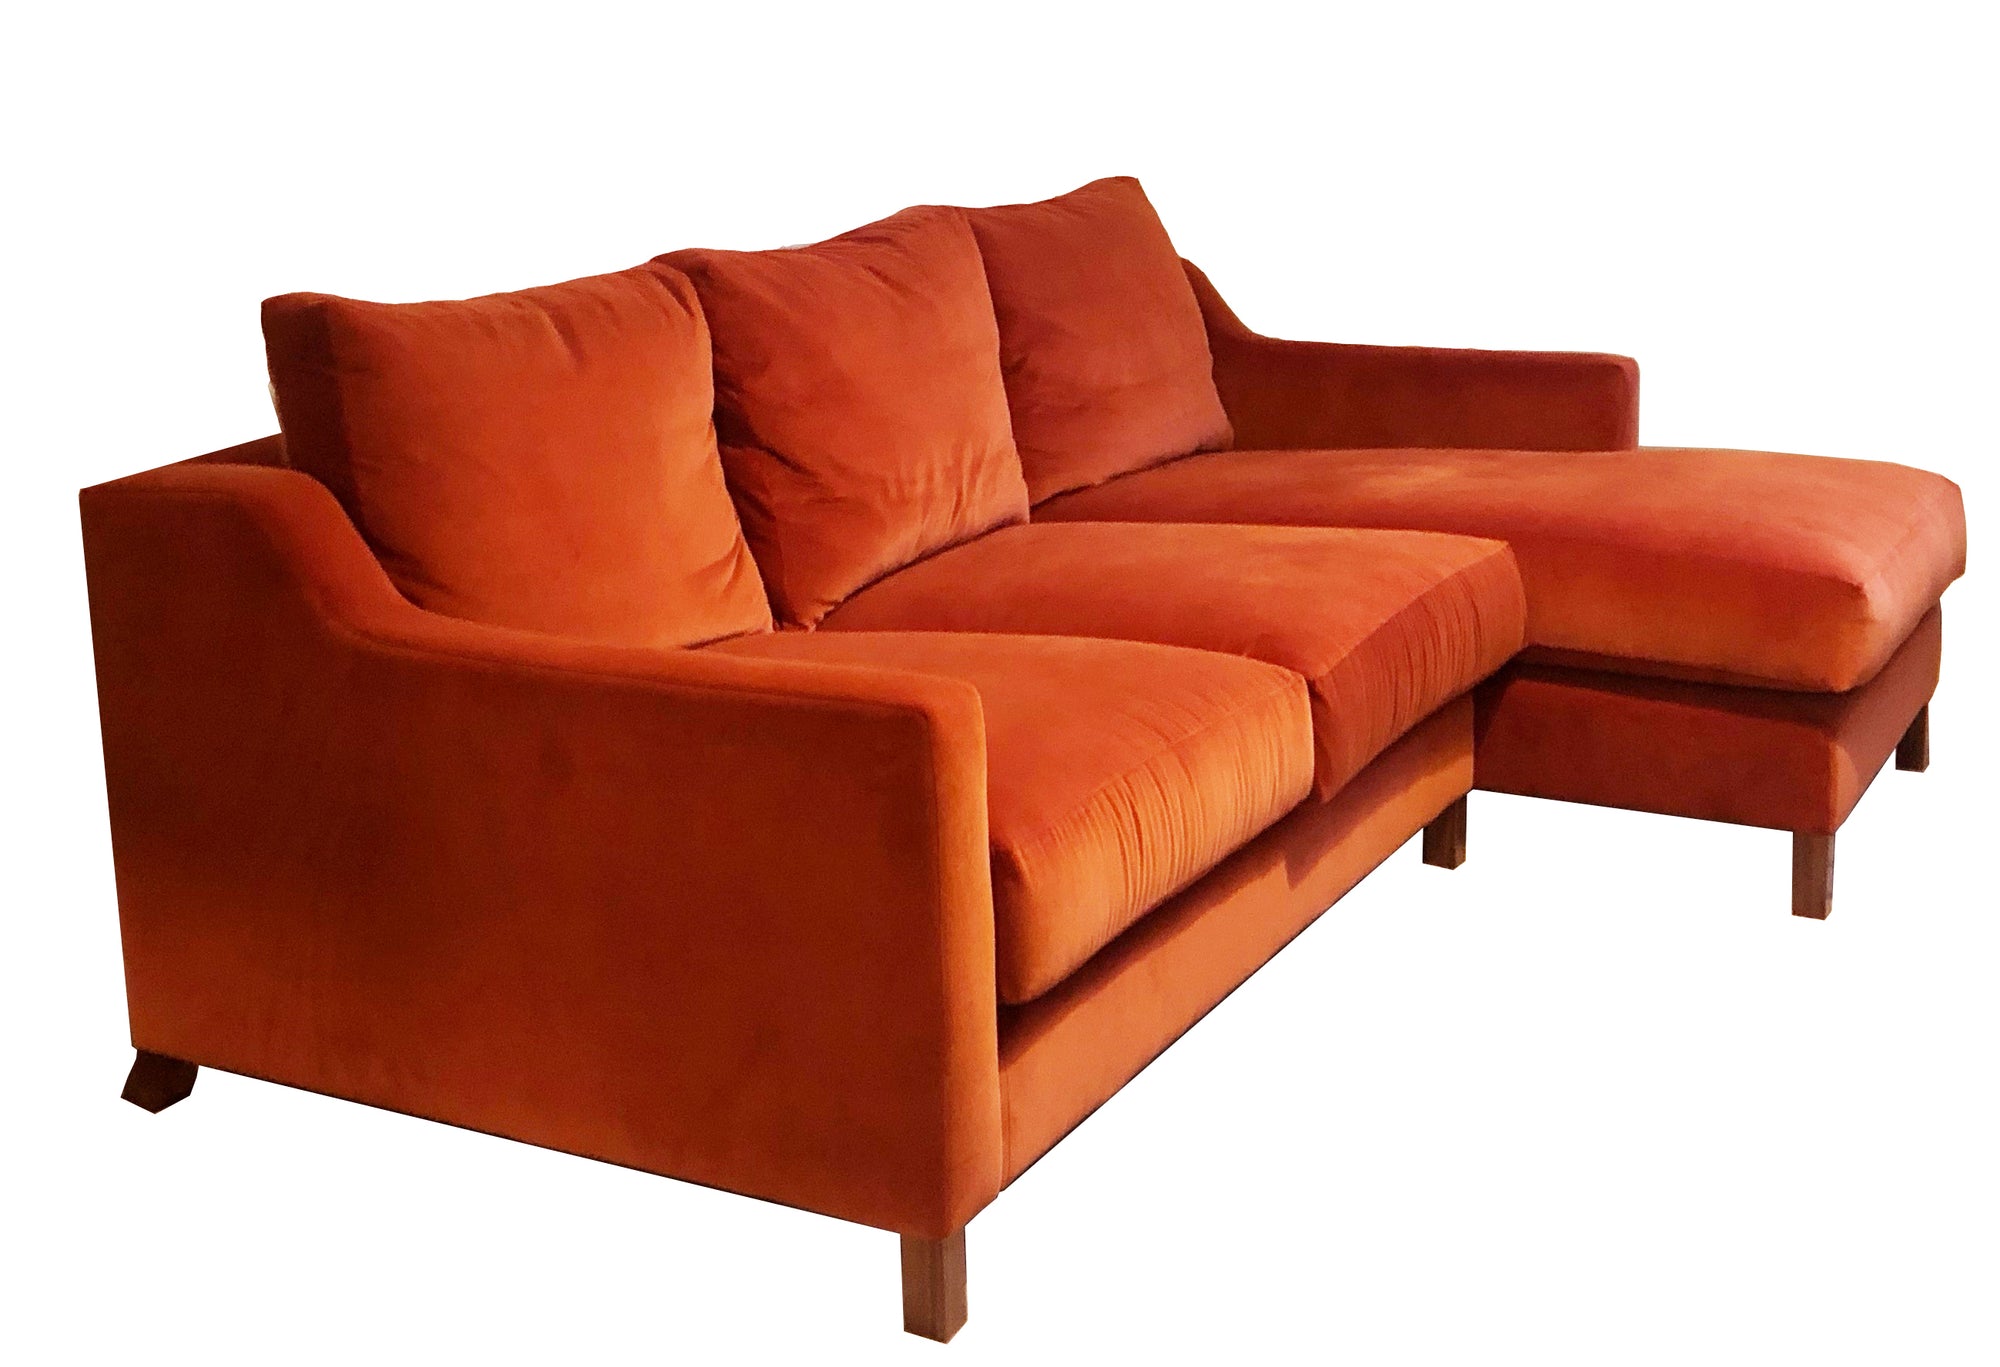 Adeline XL Sofa